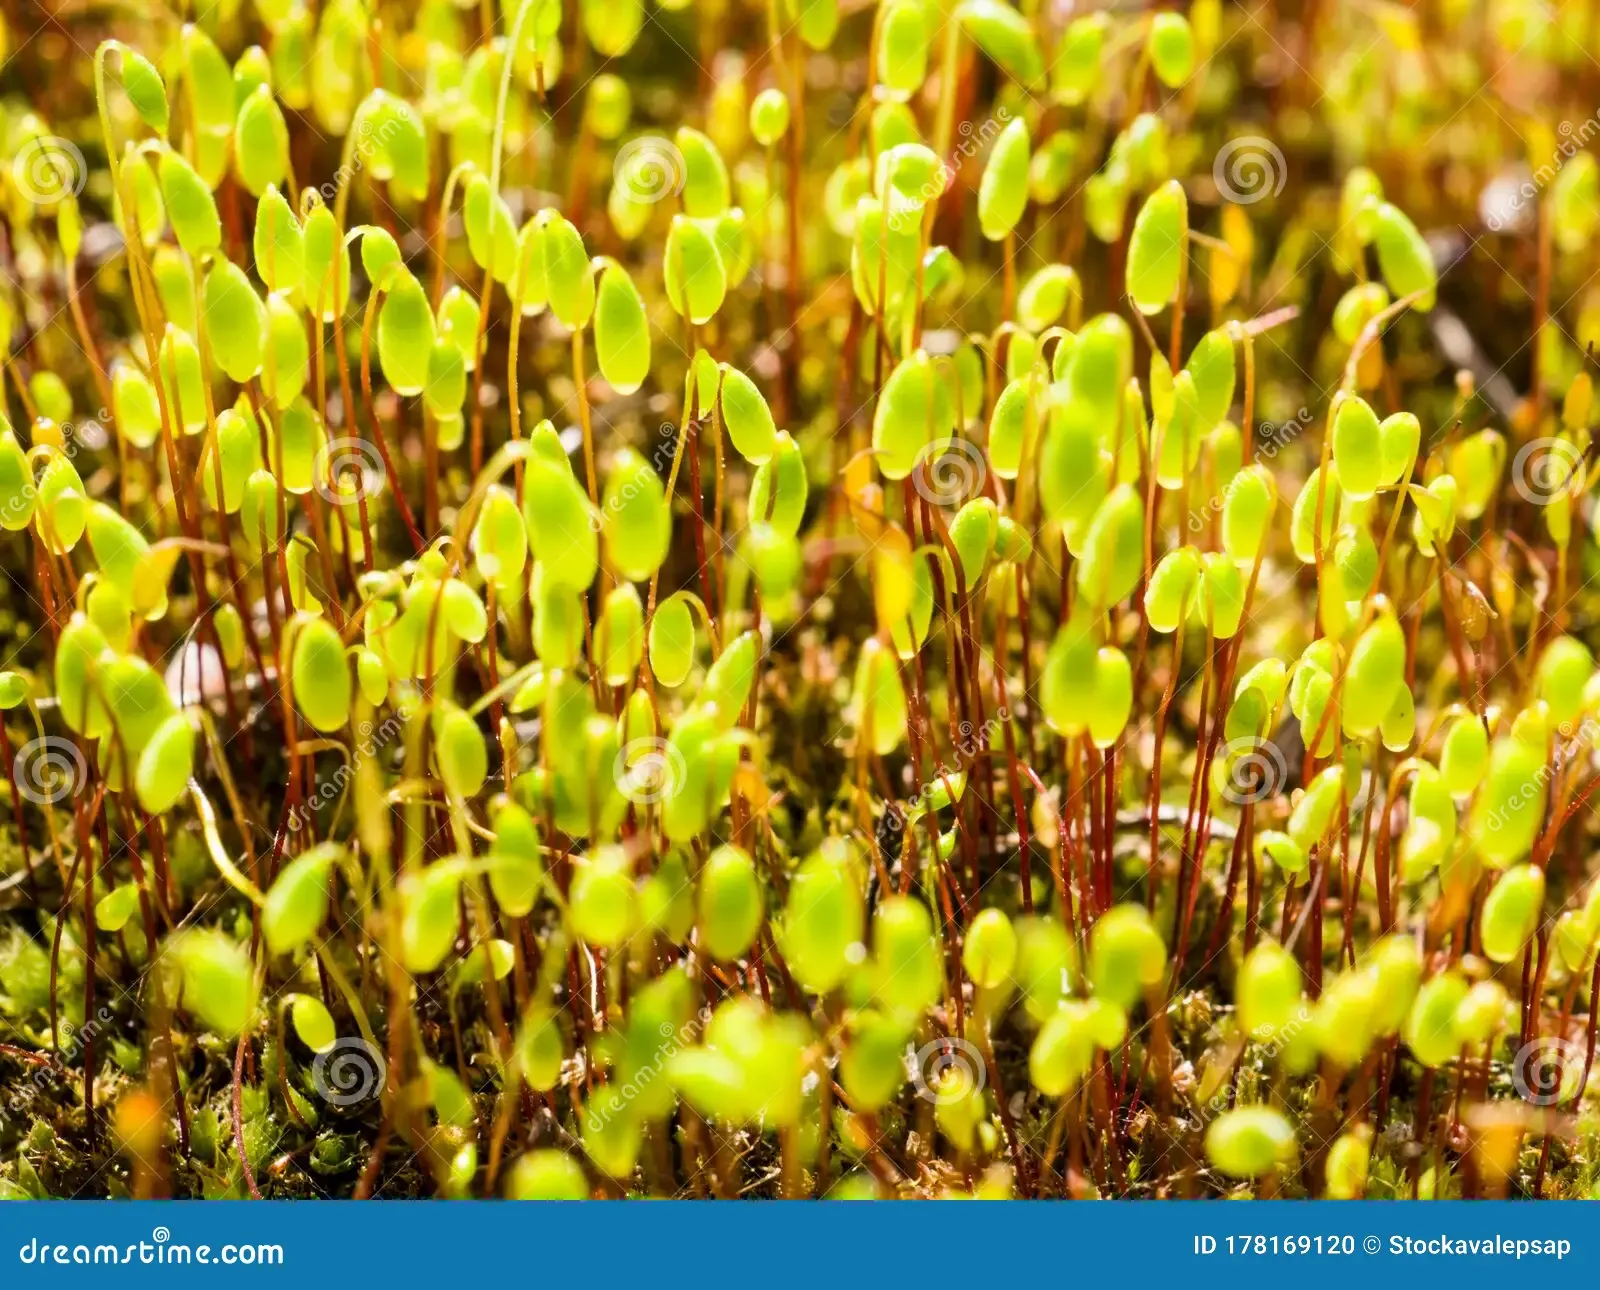 macro-van-mossy-forest-floor-pohlia-bryum-moss-green-spore-capsules-op-rode-stengels-nutans-goudlicht-vintage-wazig-178169120.jpg